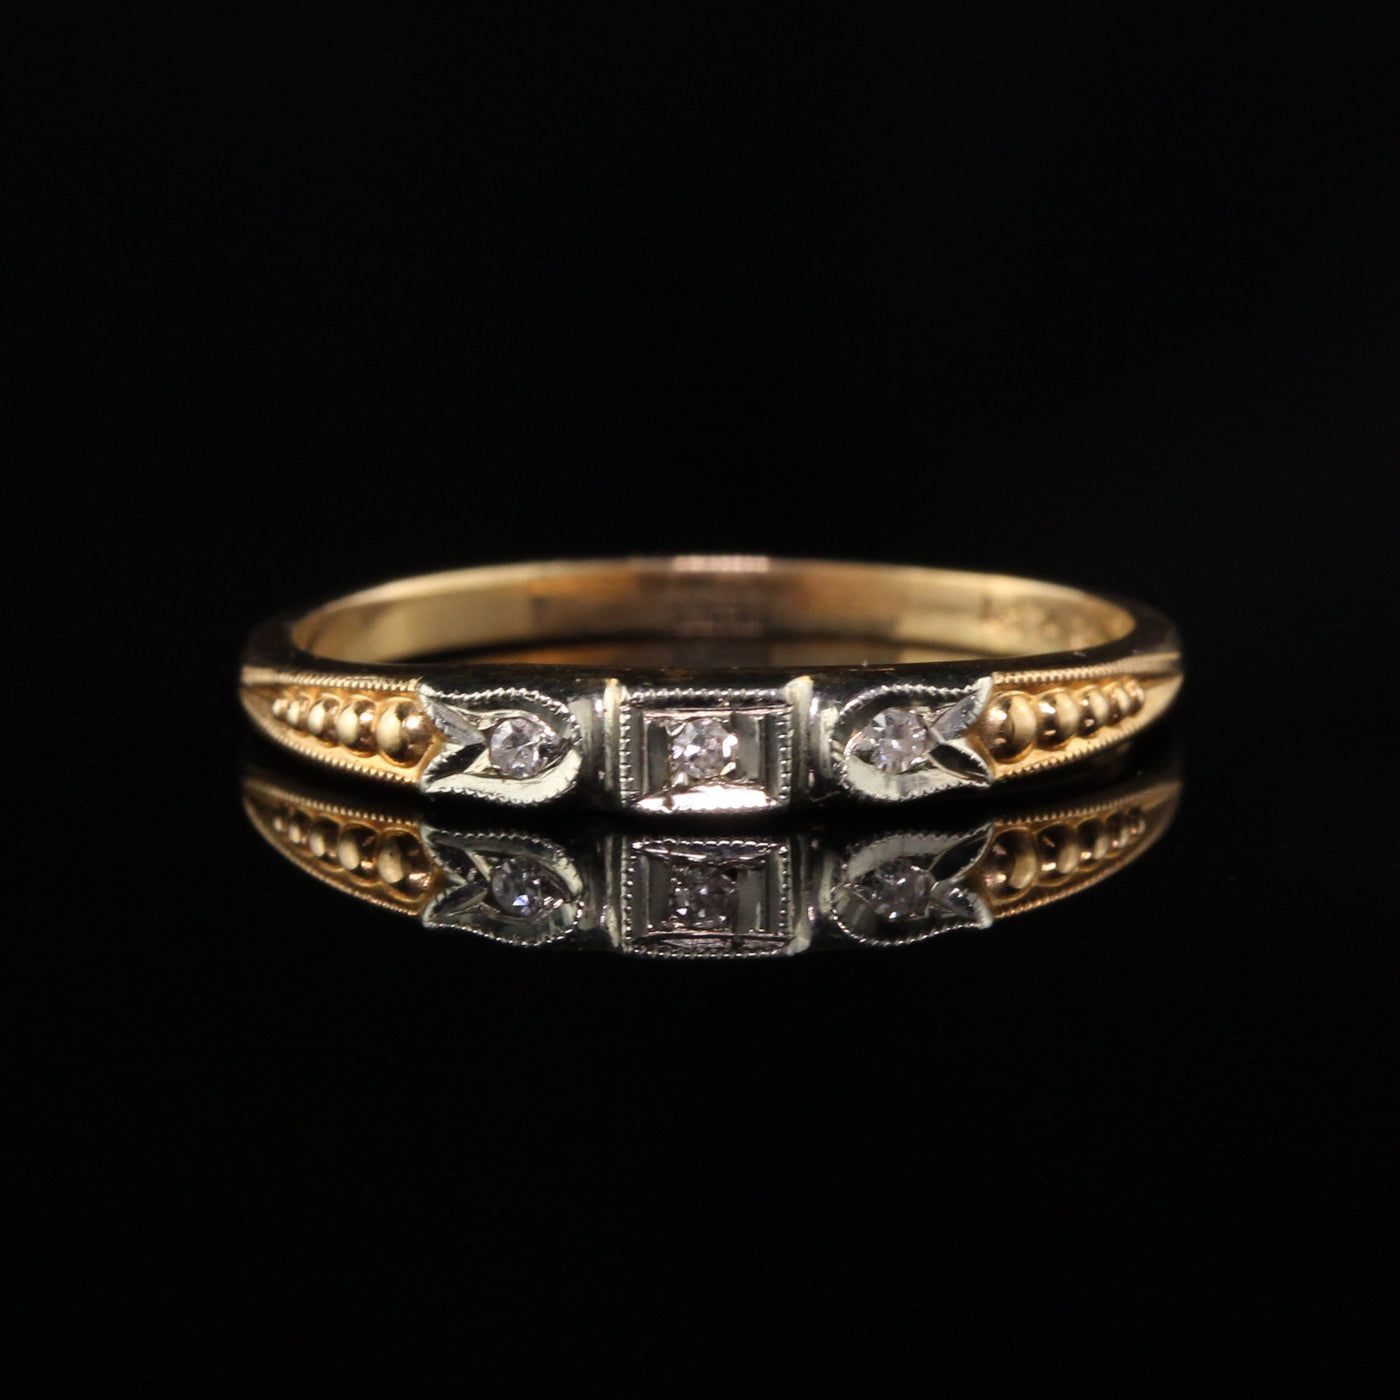 Antique Art Deco 14K Yellow Gold 3 Stone Diamond Wedding Band - Size 6 1/4